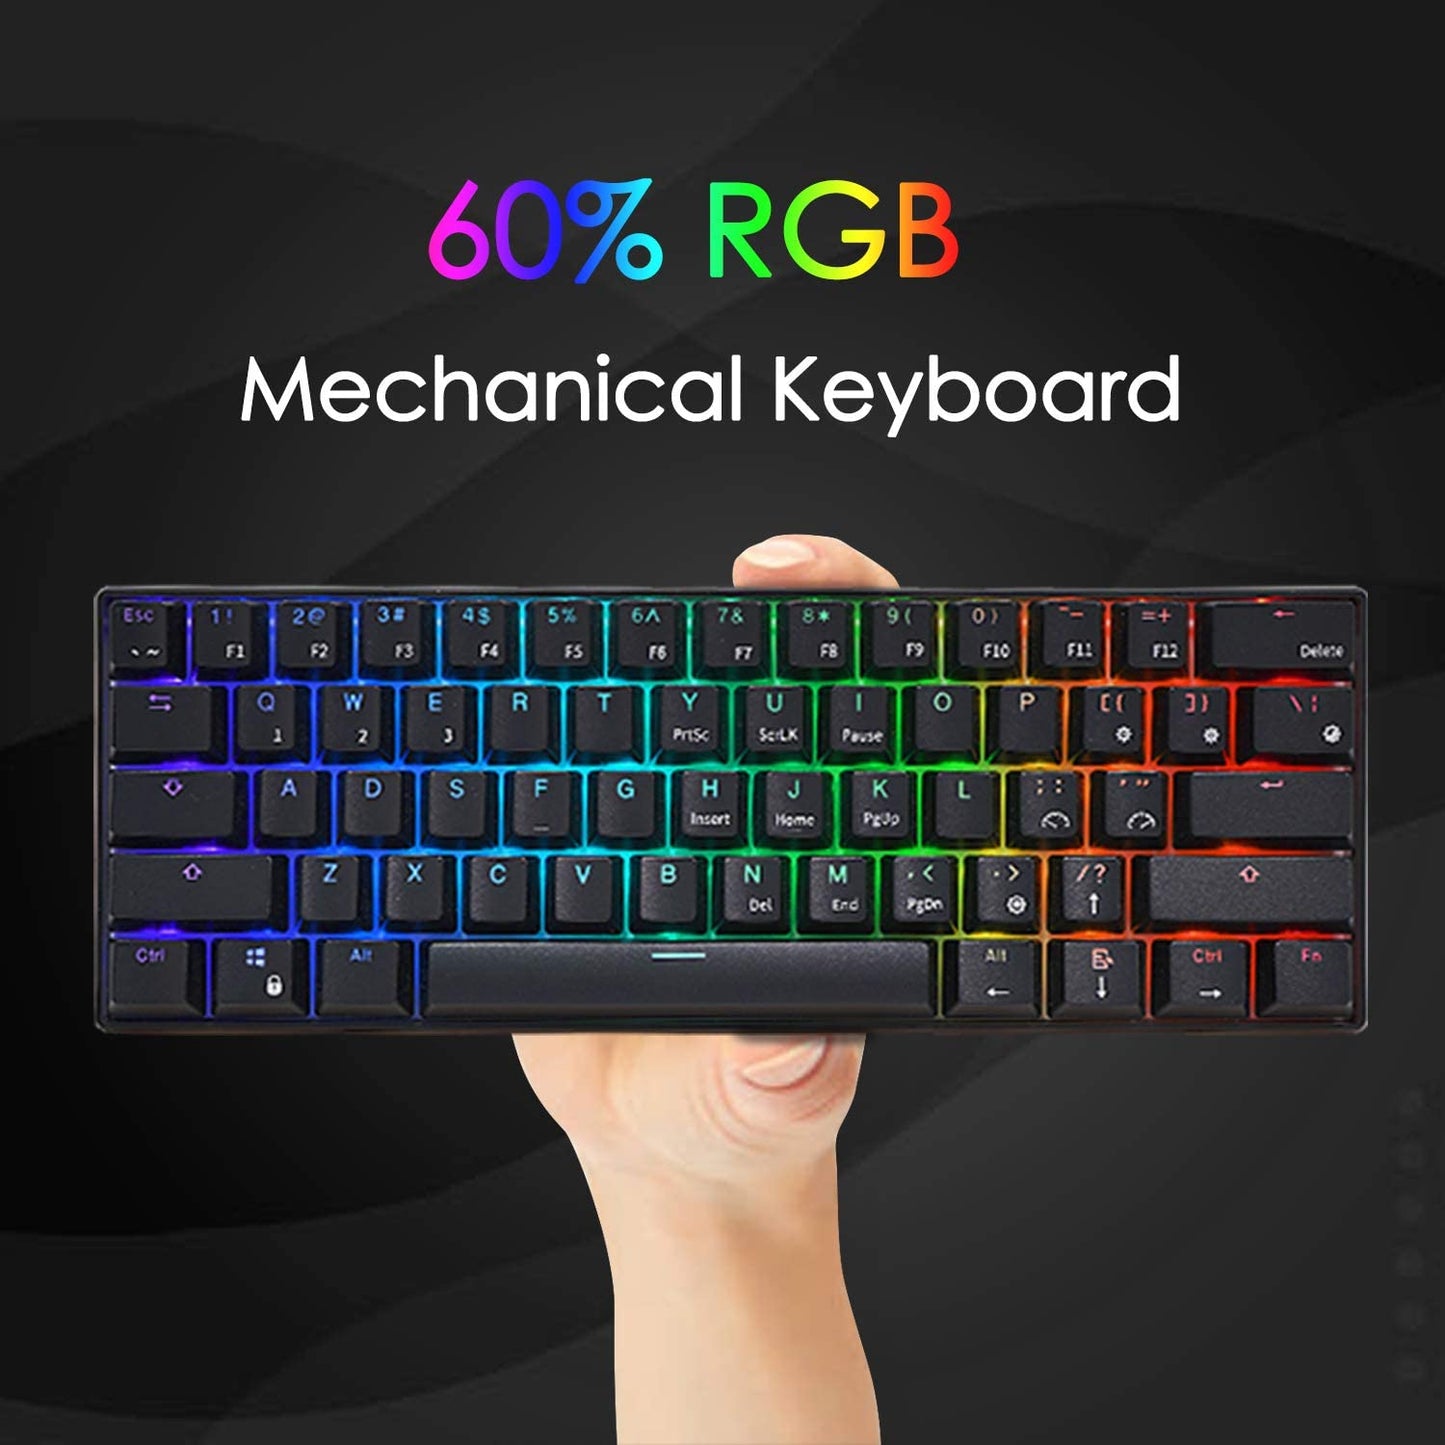 Royal Kludge RK61 - 60% Wireless/Wired Mechanical RGB Gaming Keyboard